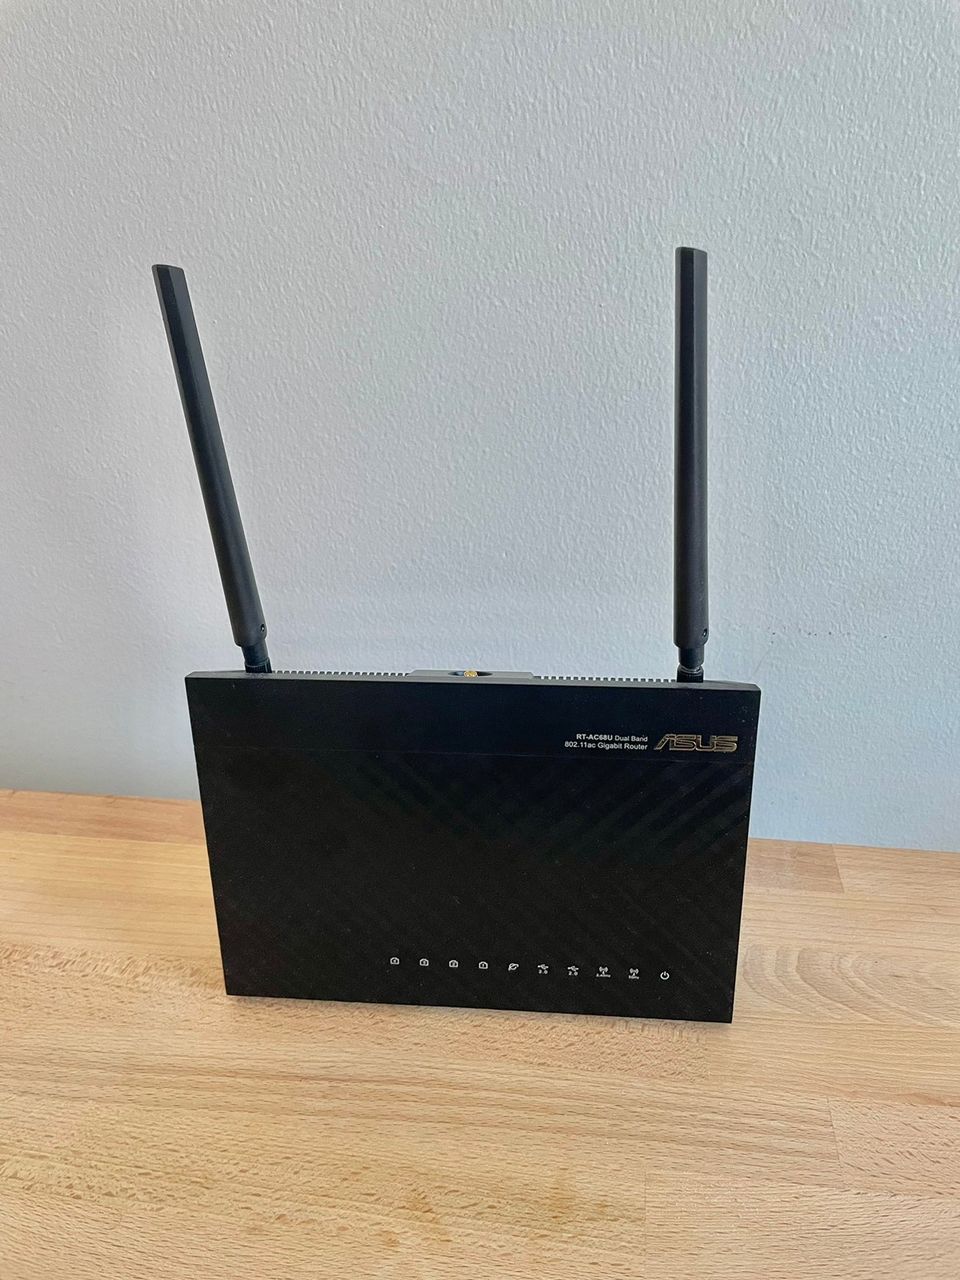 RT-AC68U 3x3 Wireless AC 1900 dual band gigabitin router